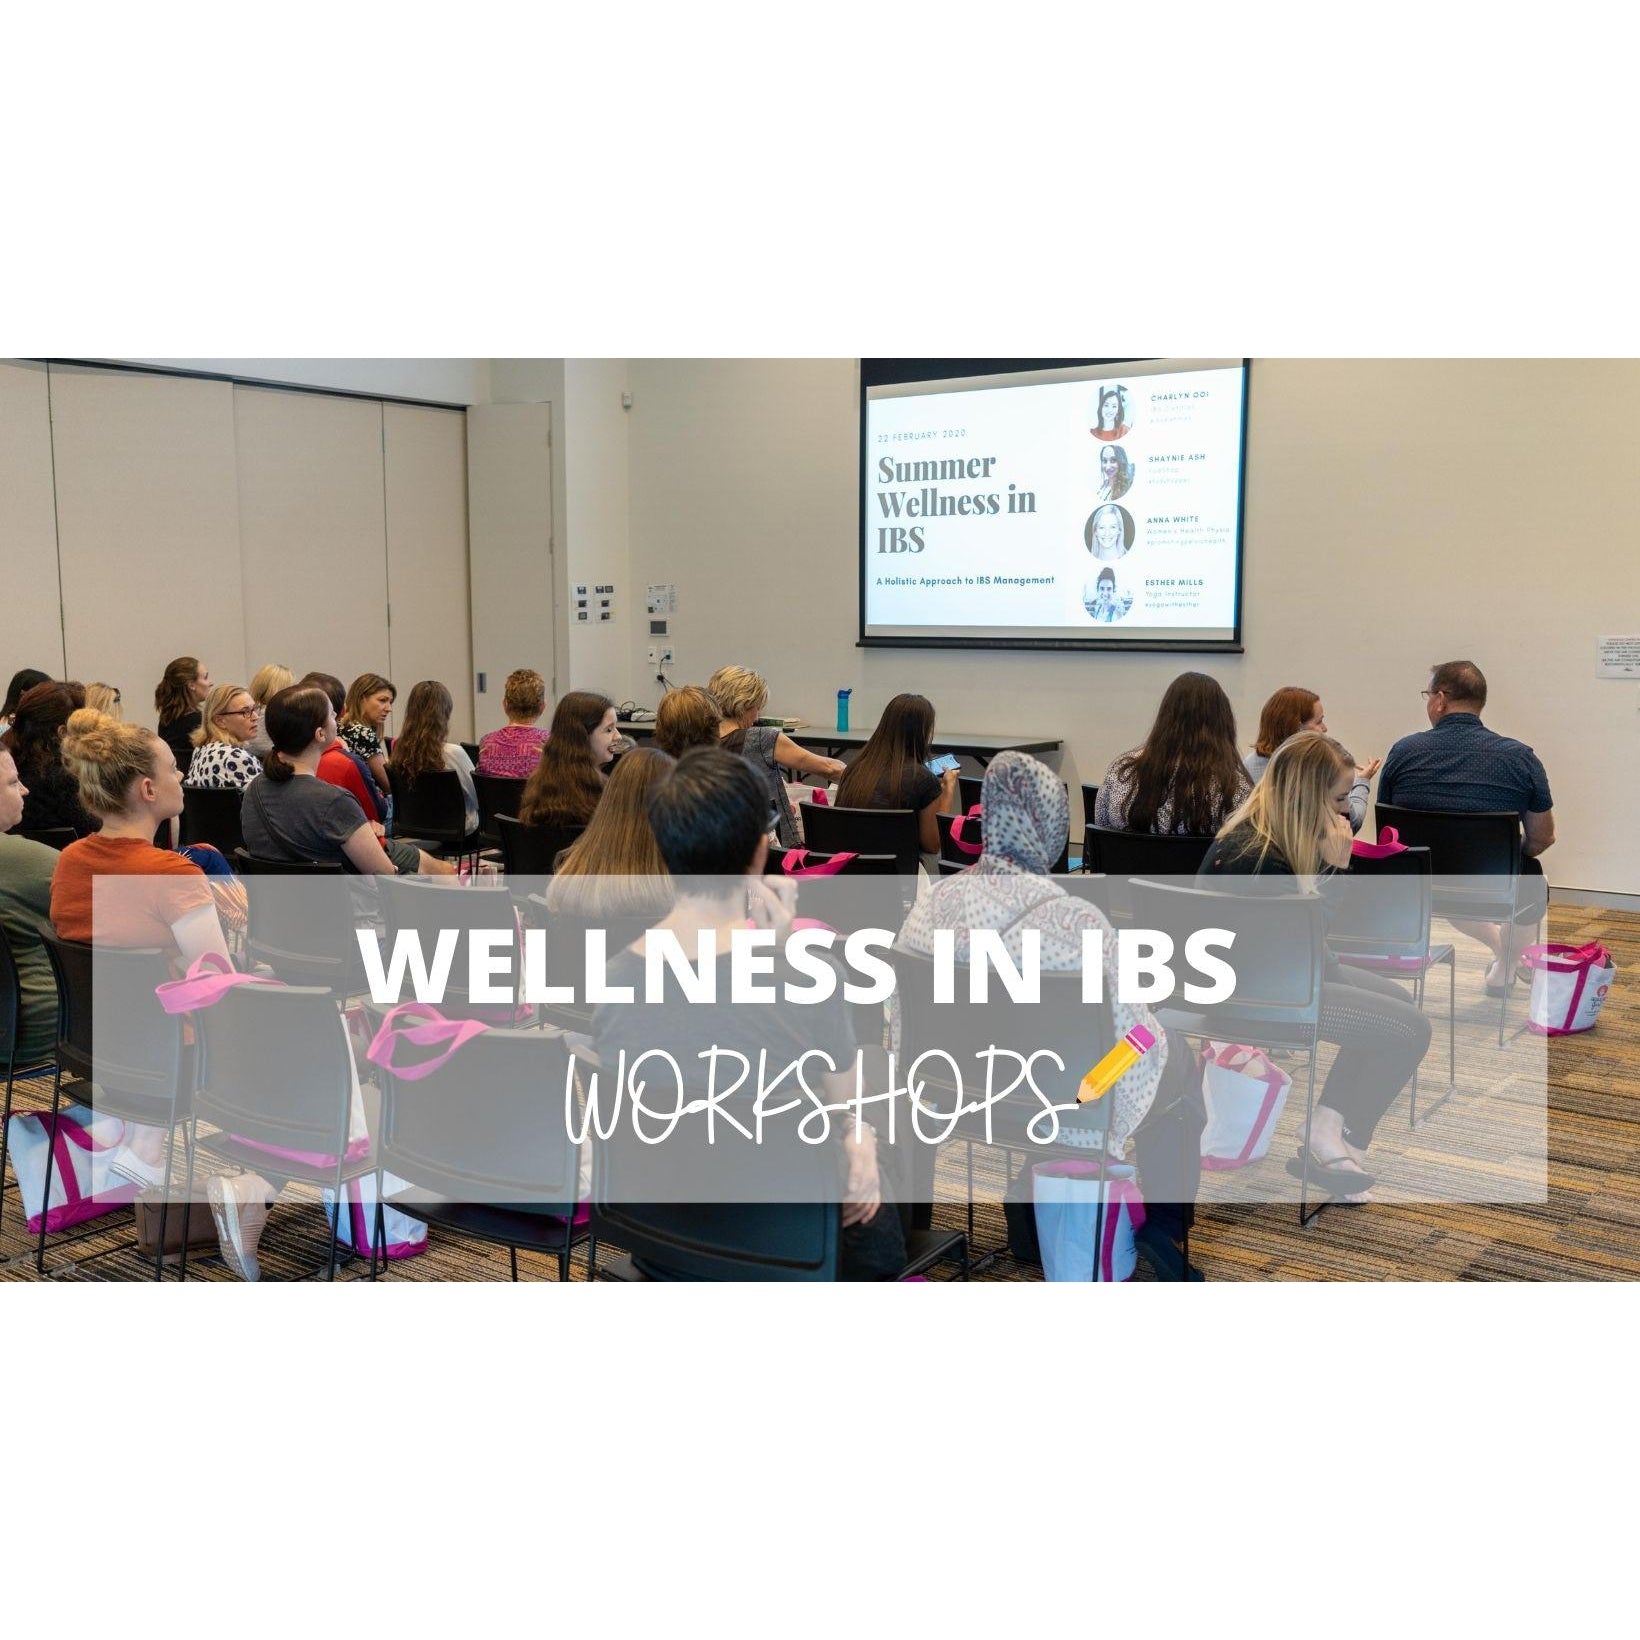 FodShop's Wellness in IBS Workshops